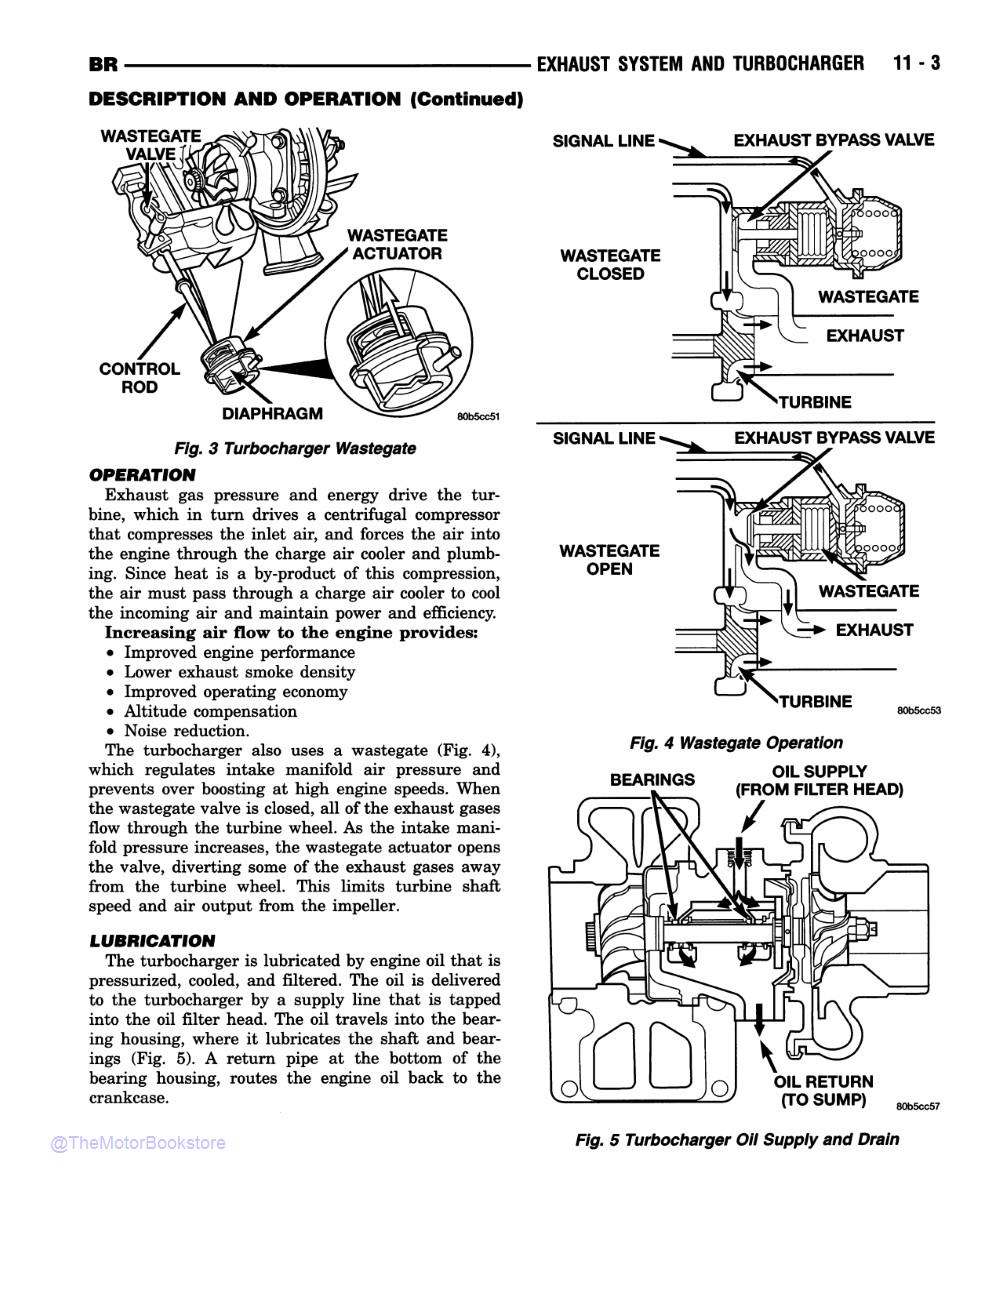 1998 Dodge Ram Truck BR/BE Cummins Diesel Repair Manual Supplement - Sample Page 1